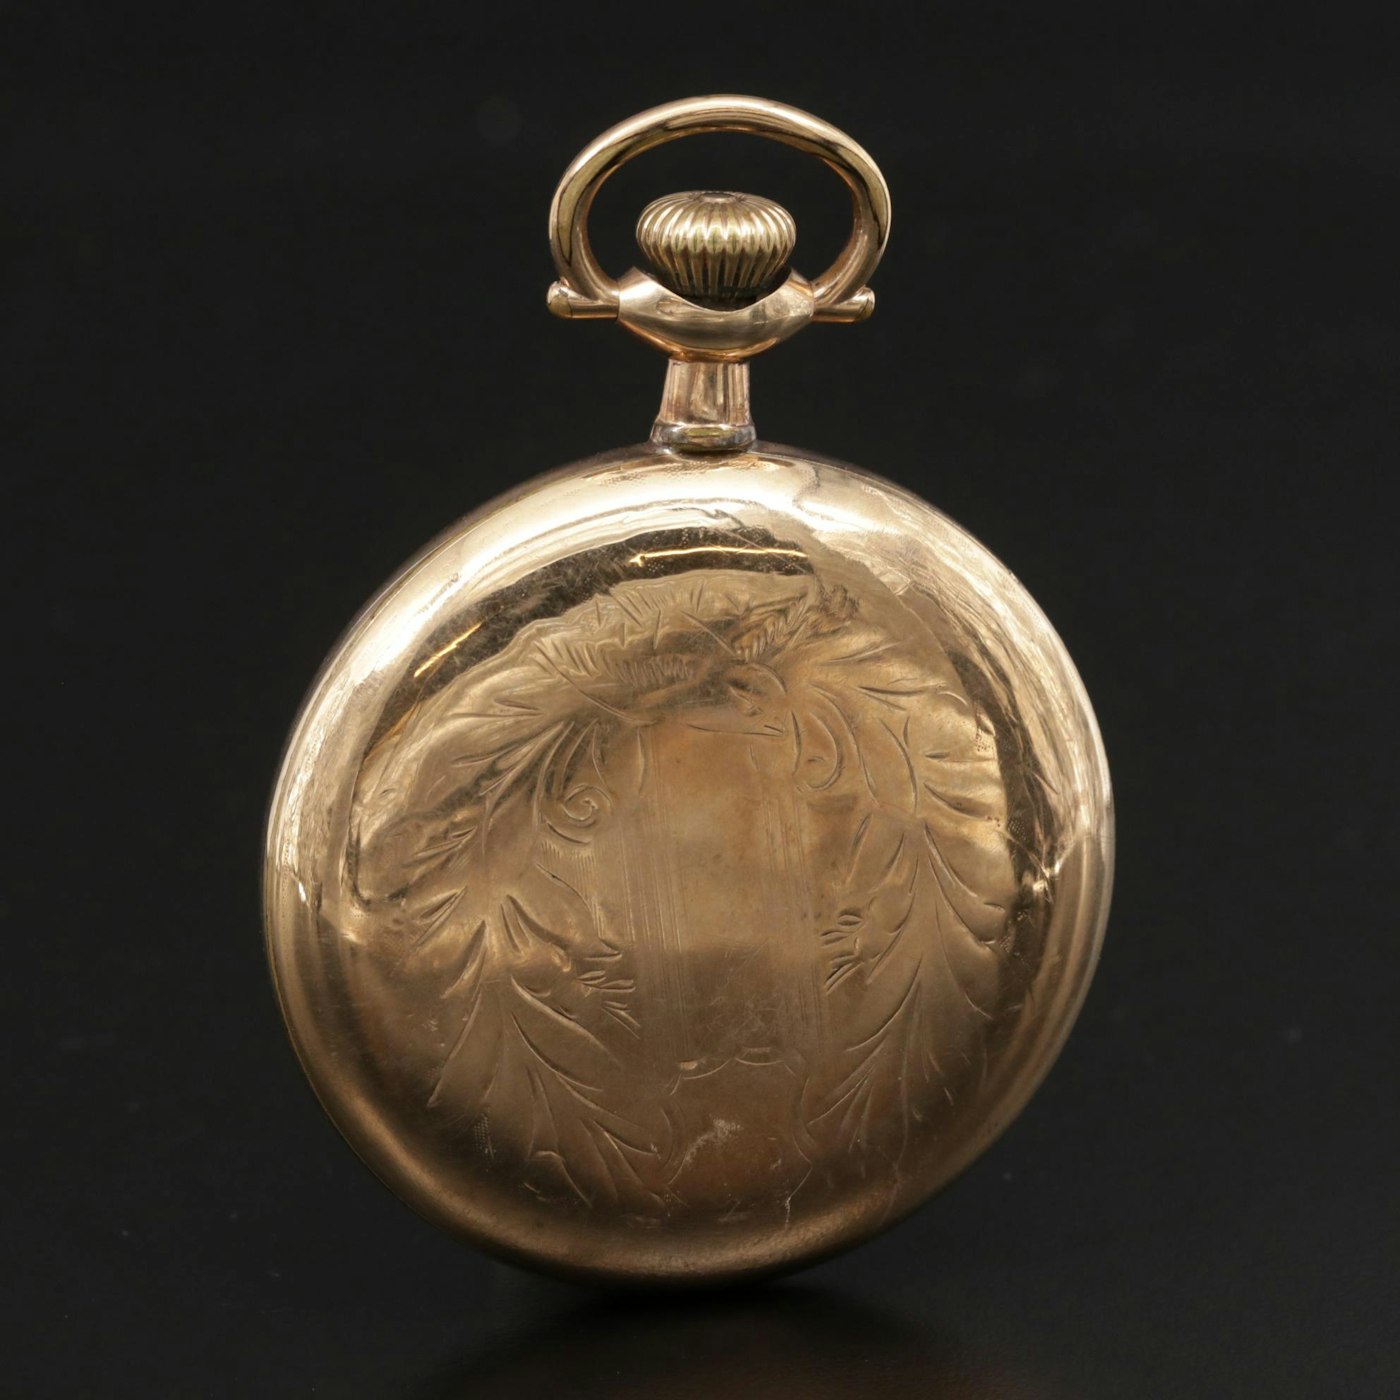 1917-hamilton-992-gold-filled-open-face-pocket-watch-ebth